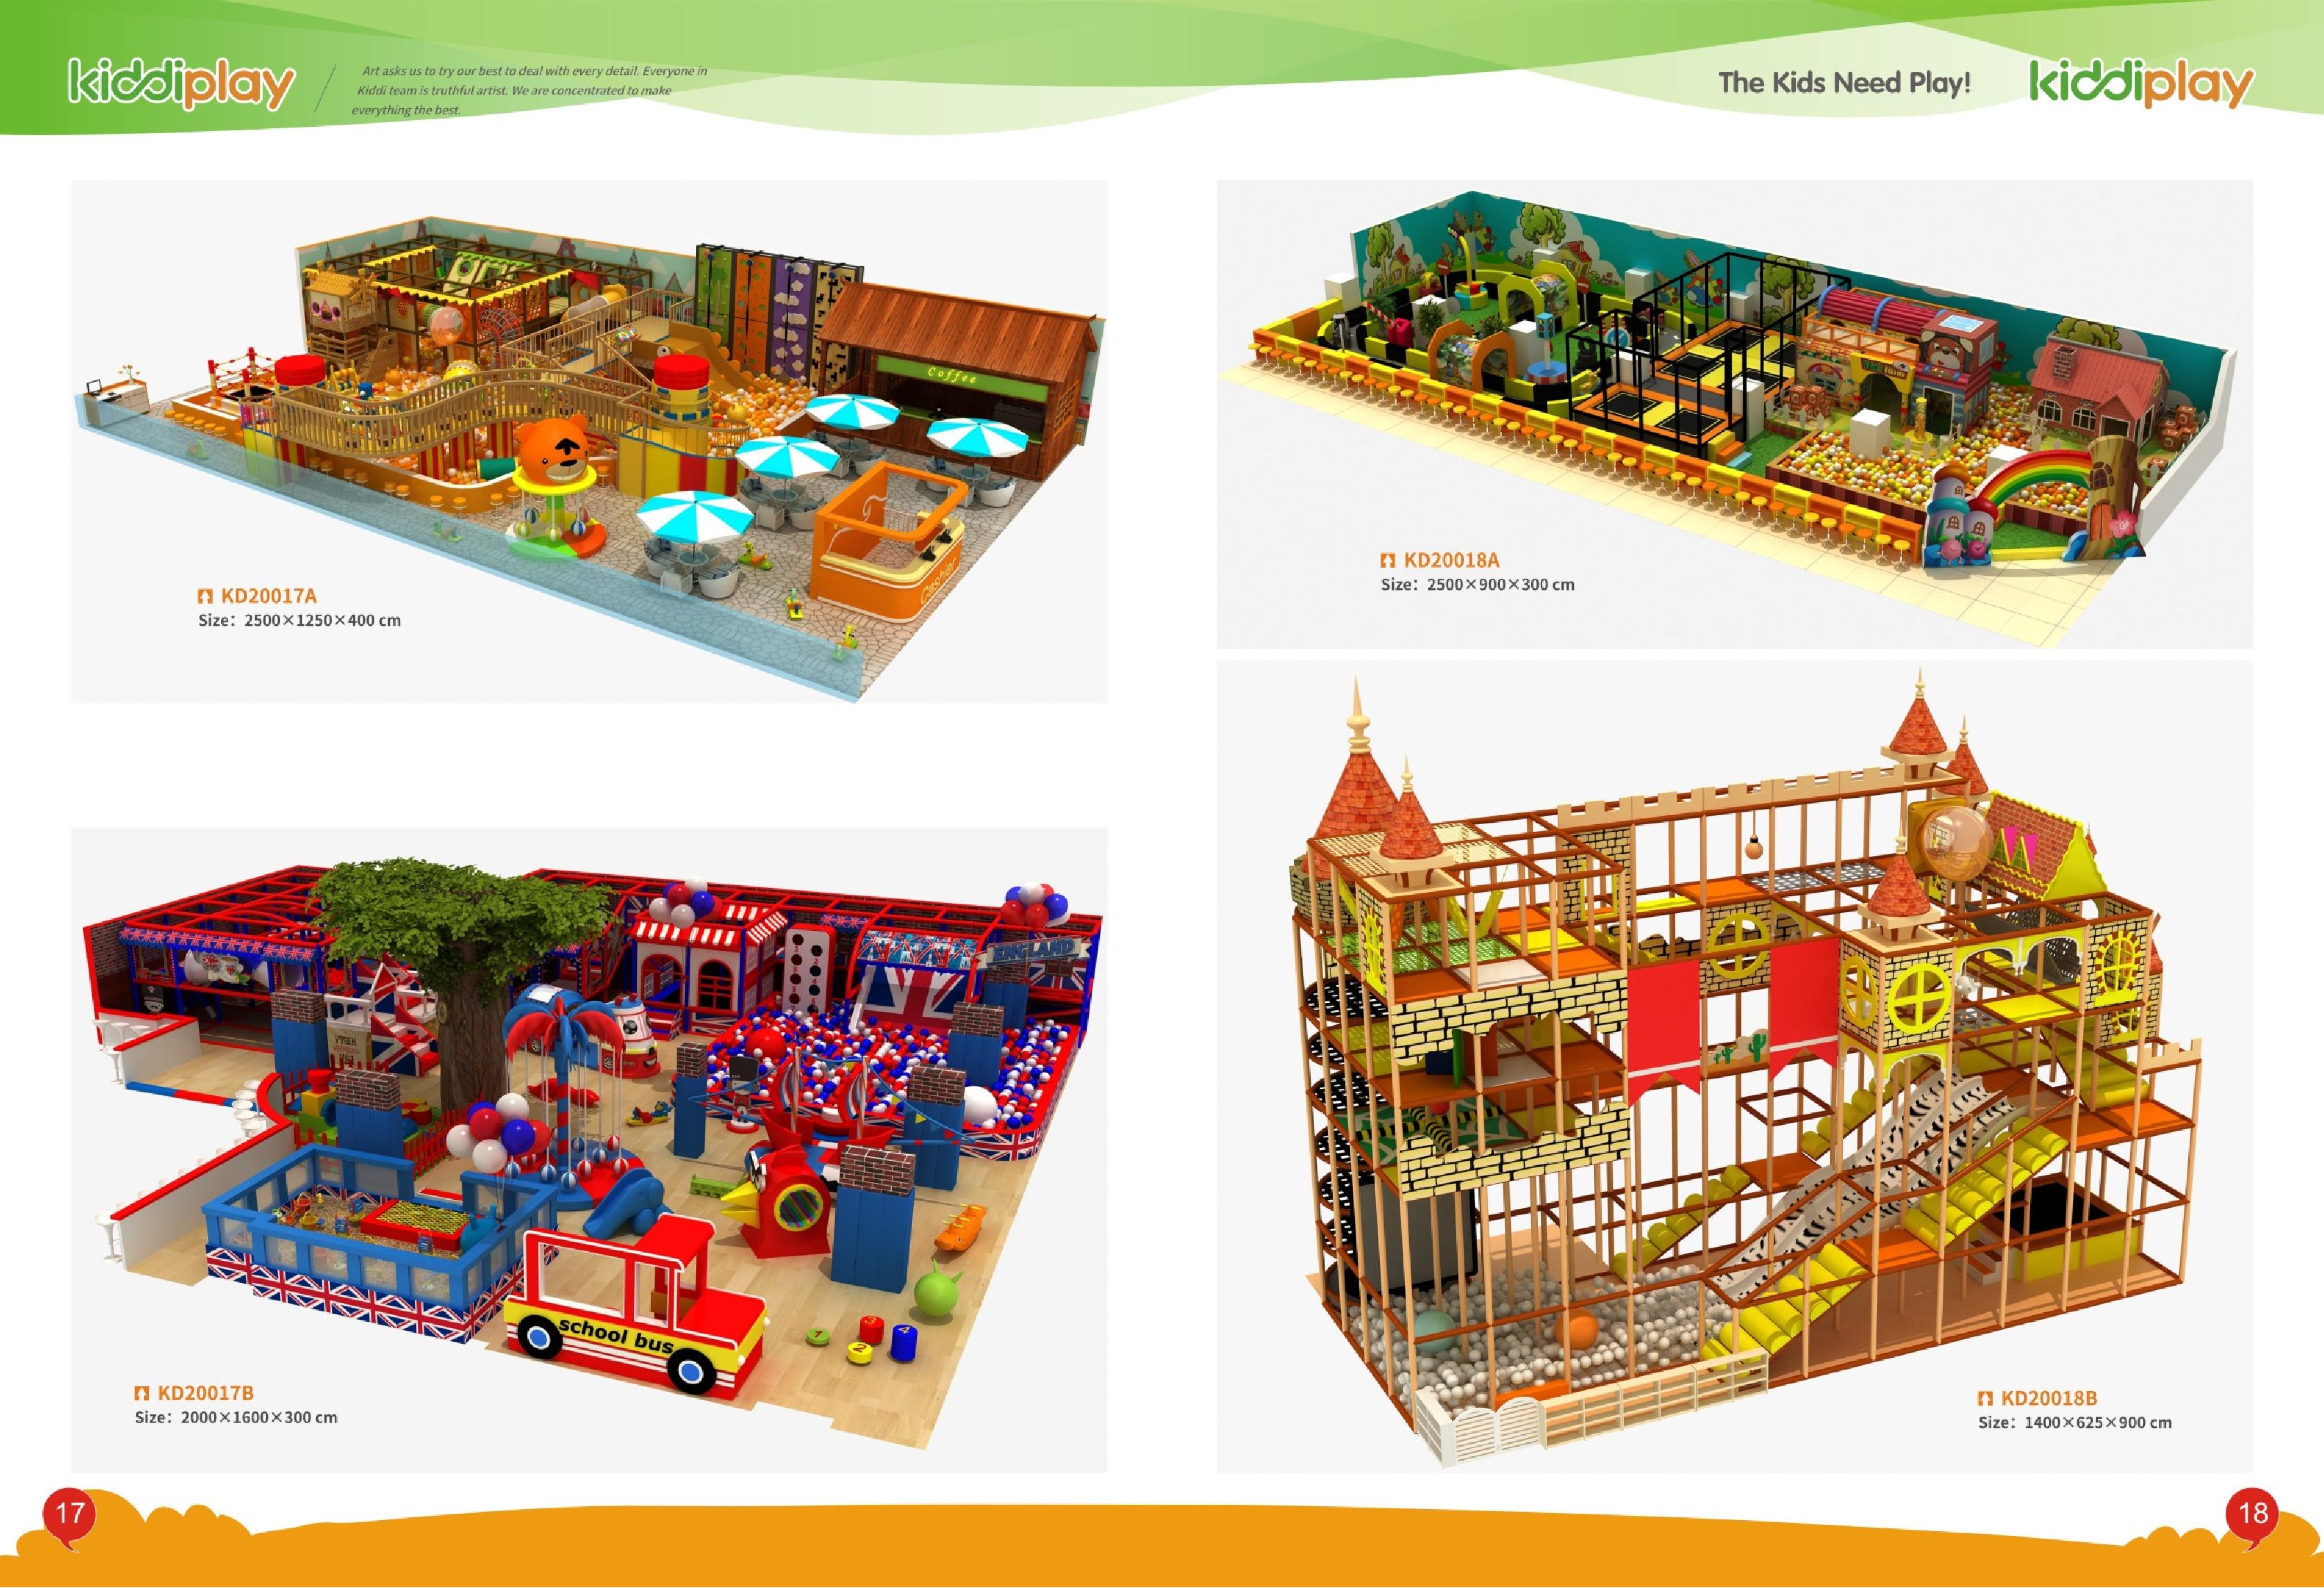 2019 Indoor Playground and Trampoline Parks - KiddiPlay_10.jpg